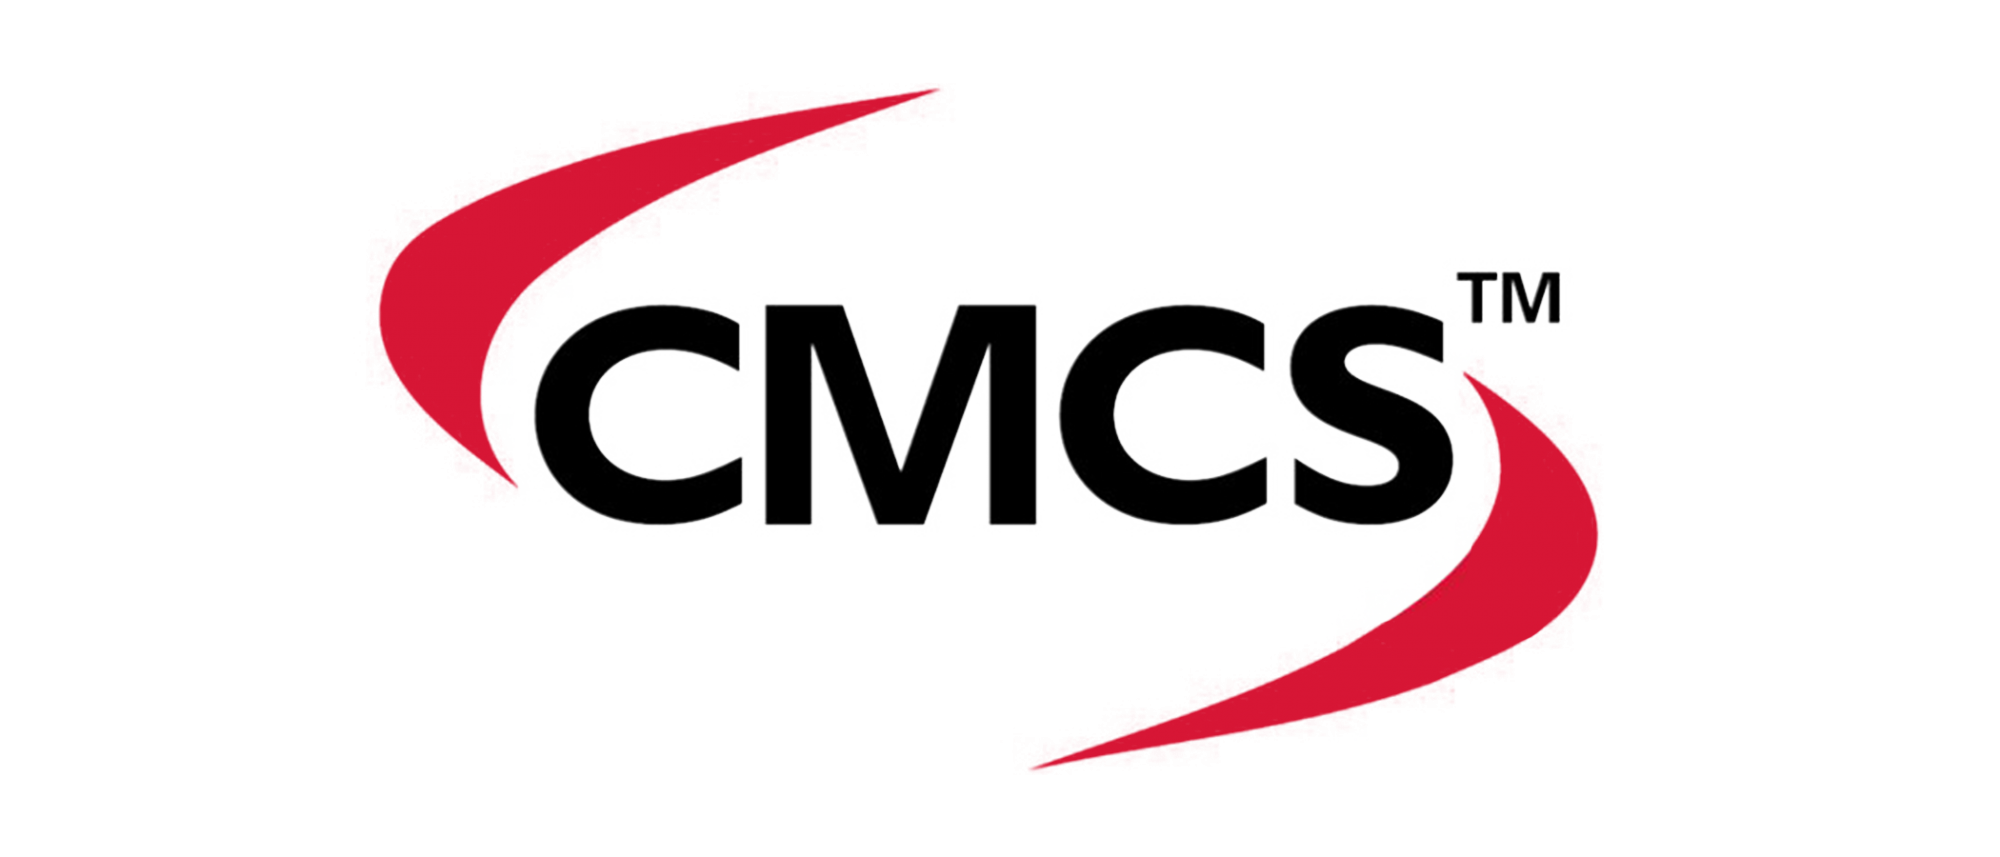 PMWeb Client CMCS